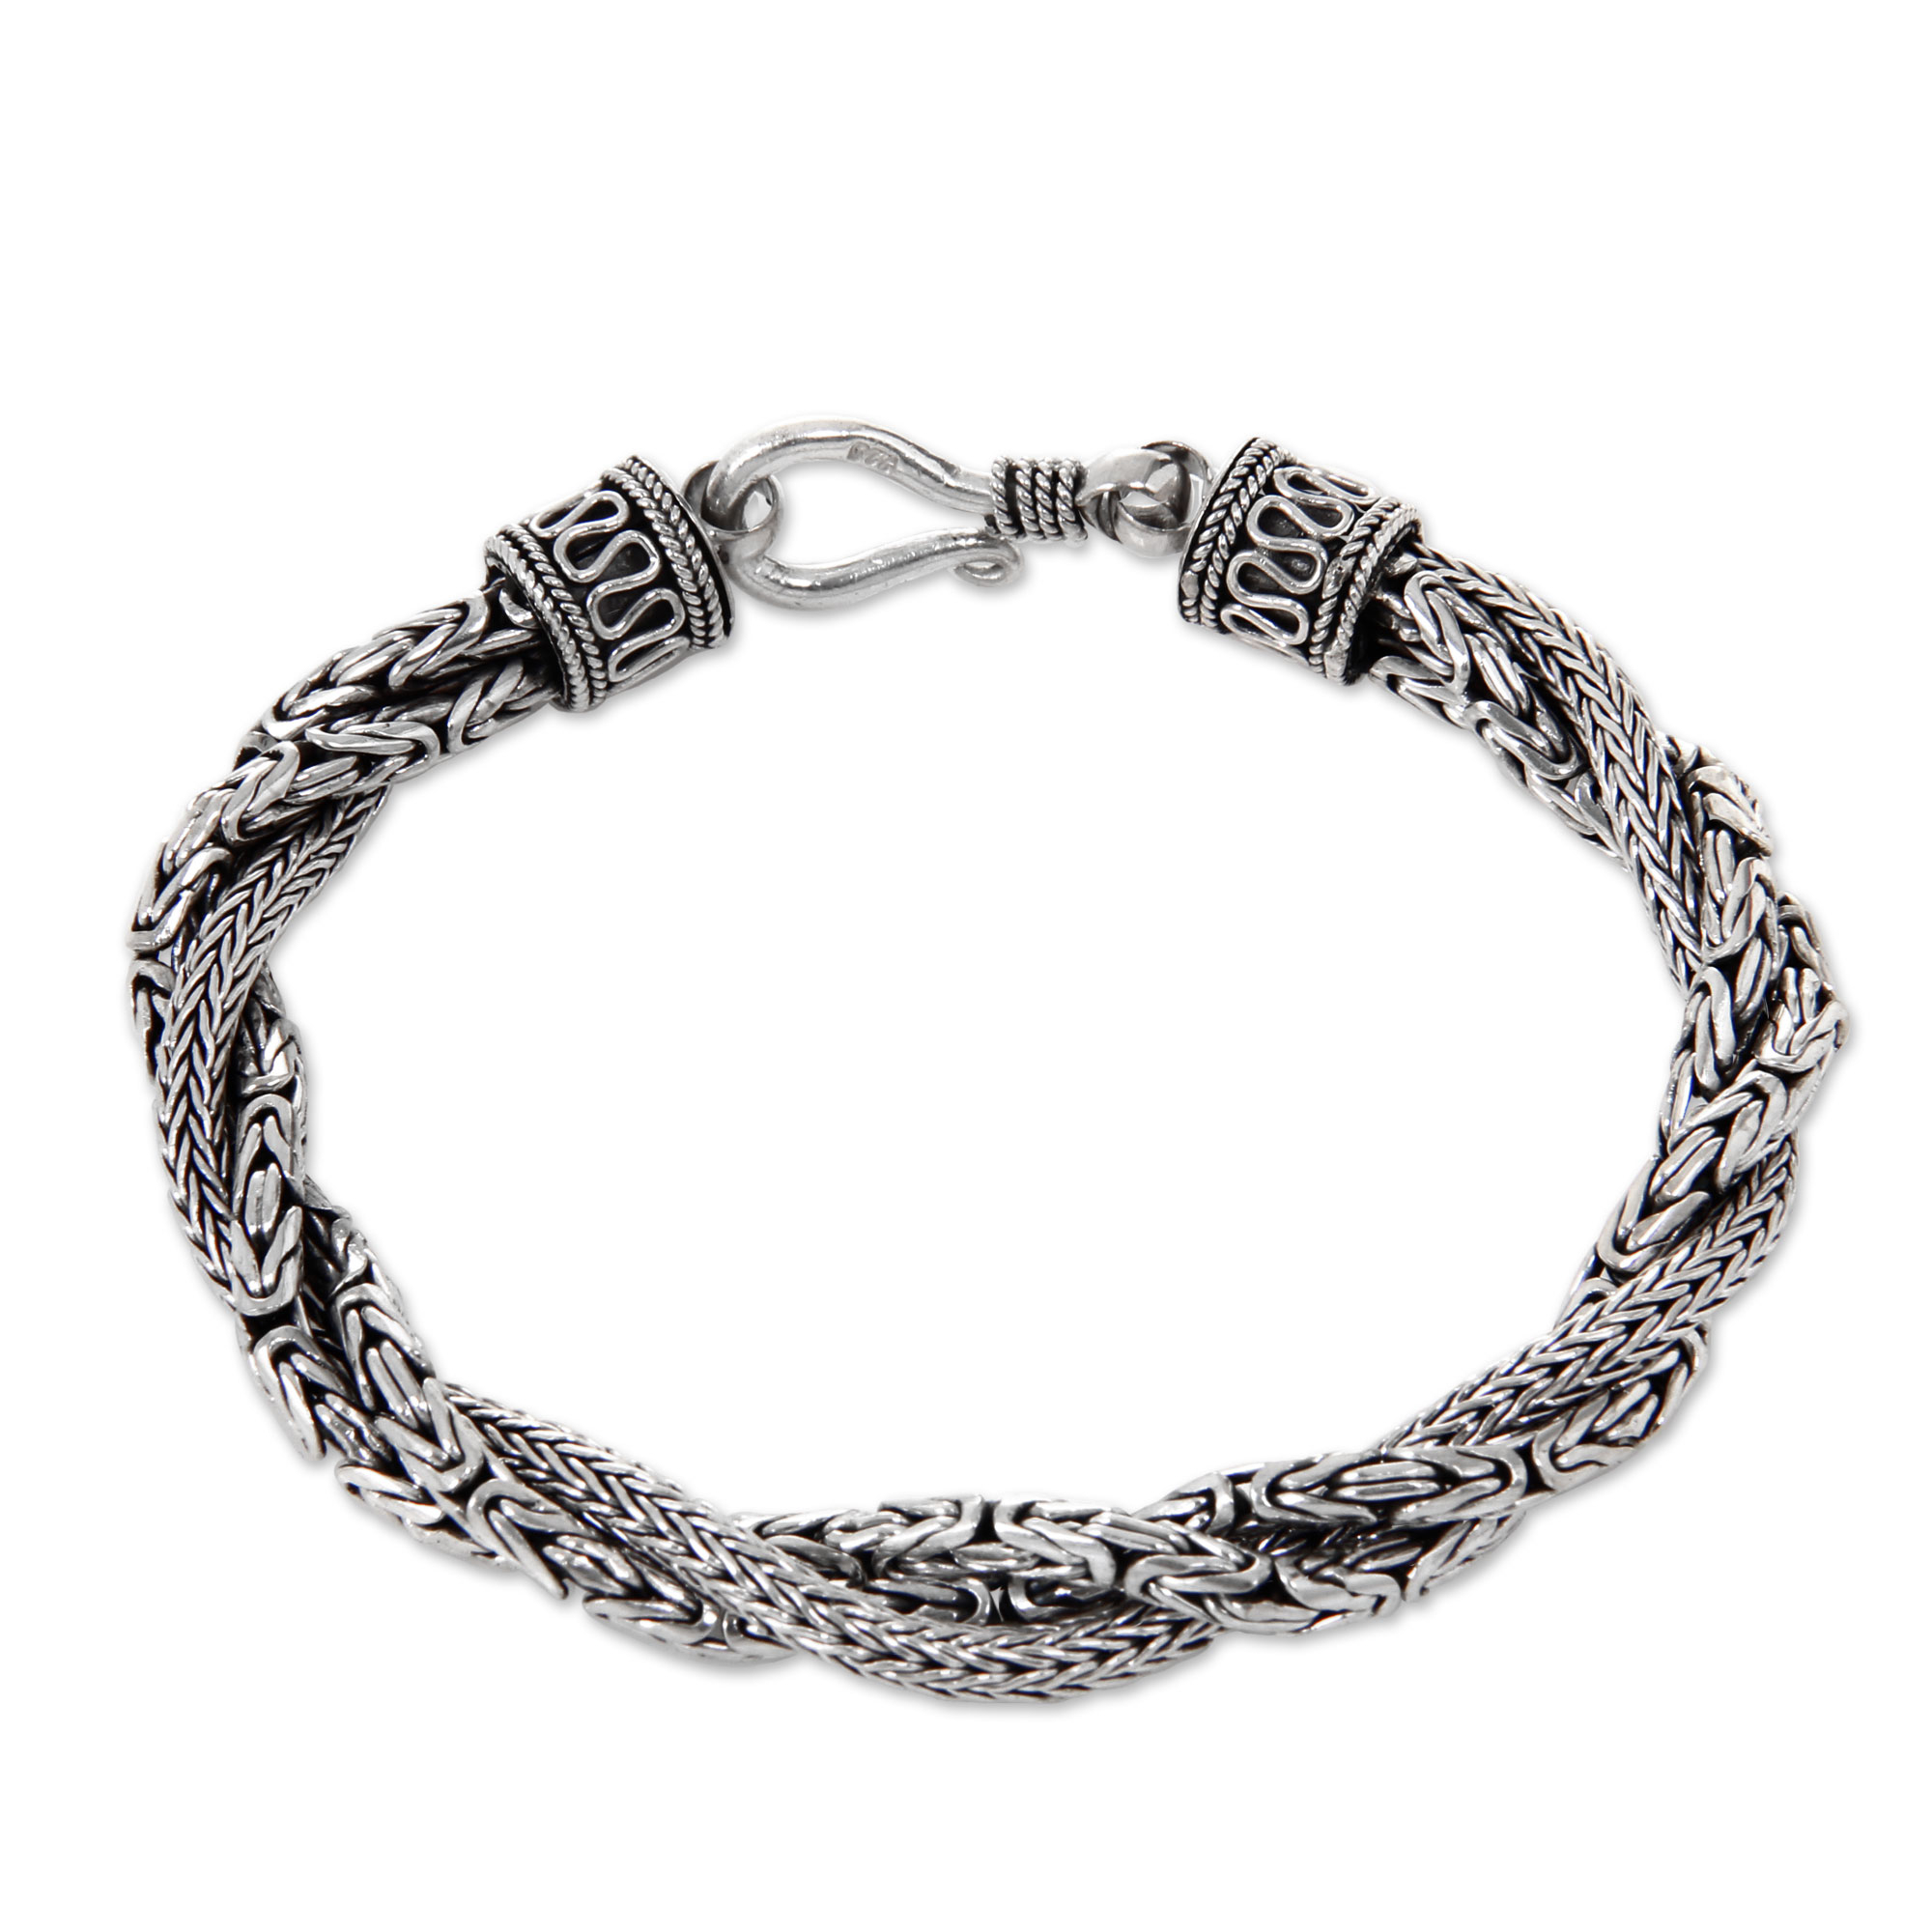 Handcrafted Triple Braid Sterling Silver Bracelet from Bali - Sanca ...